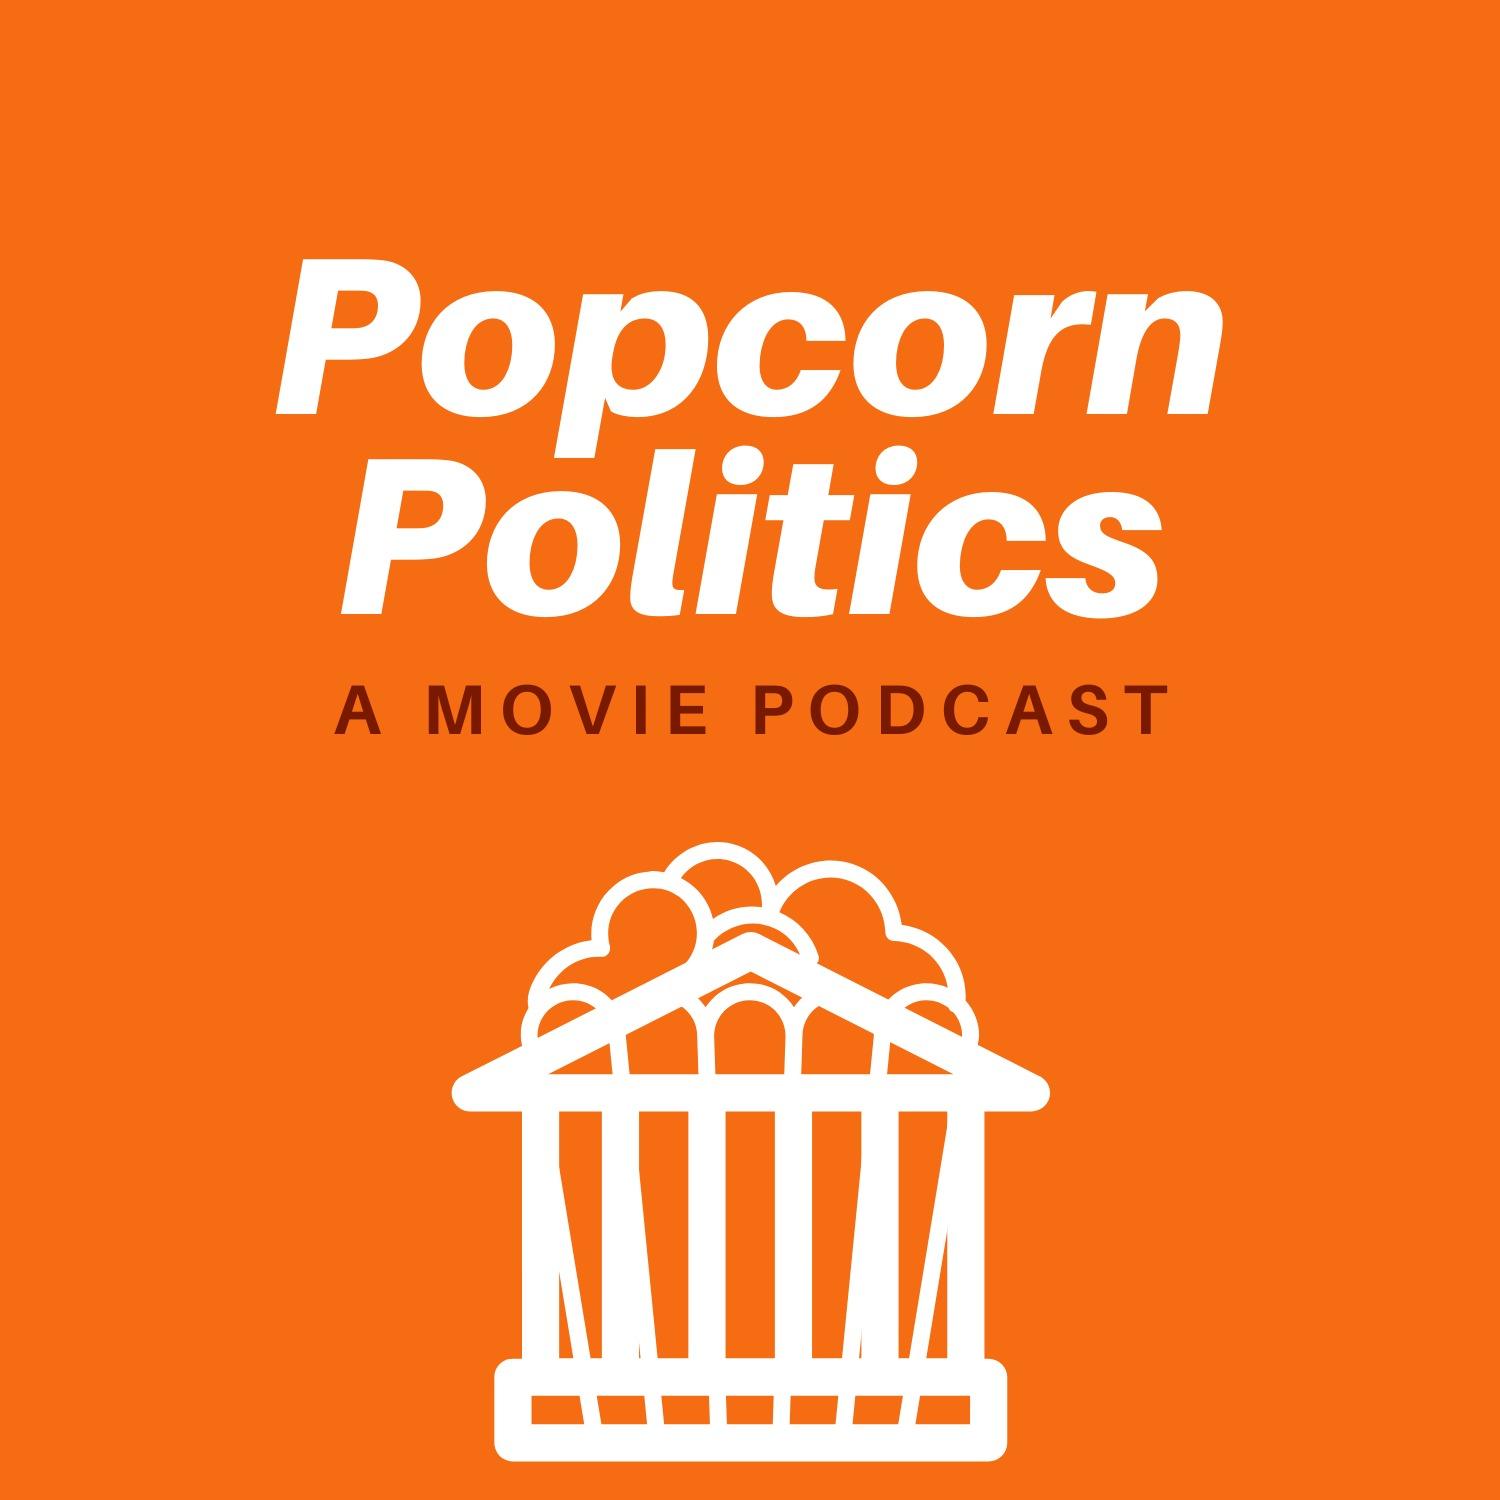 Popcorn Politics